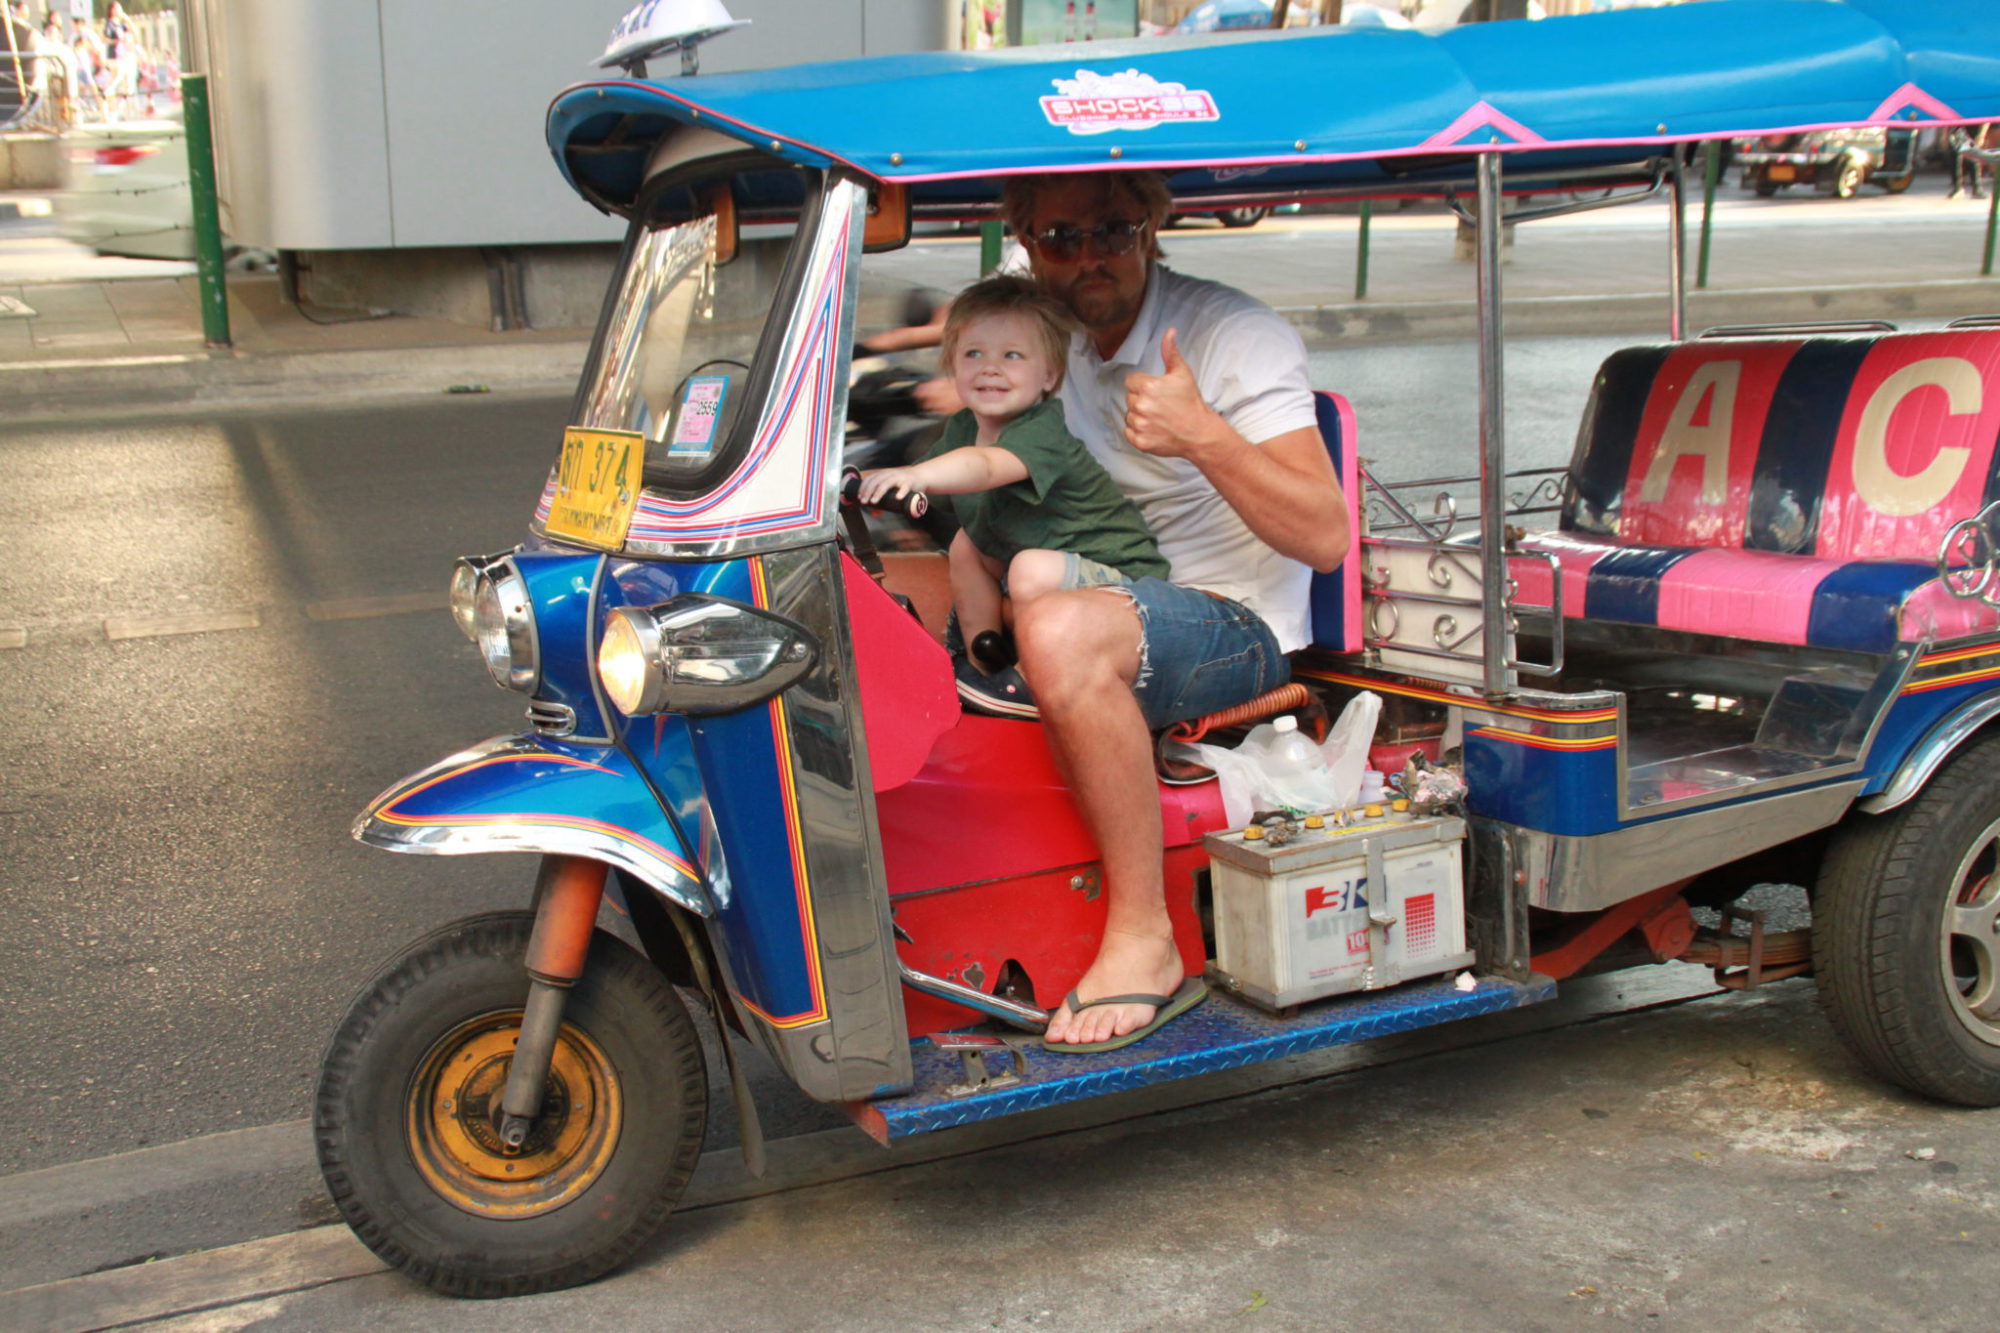 Kids Love Travel: bangkok with kids